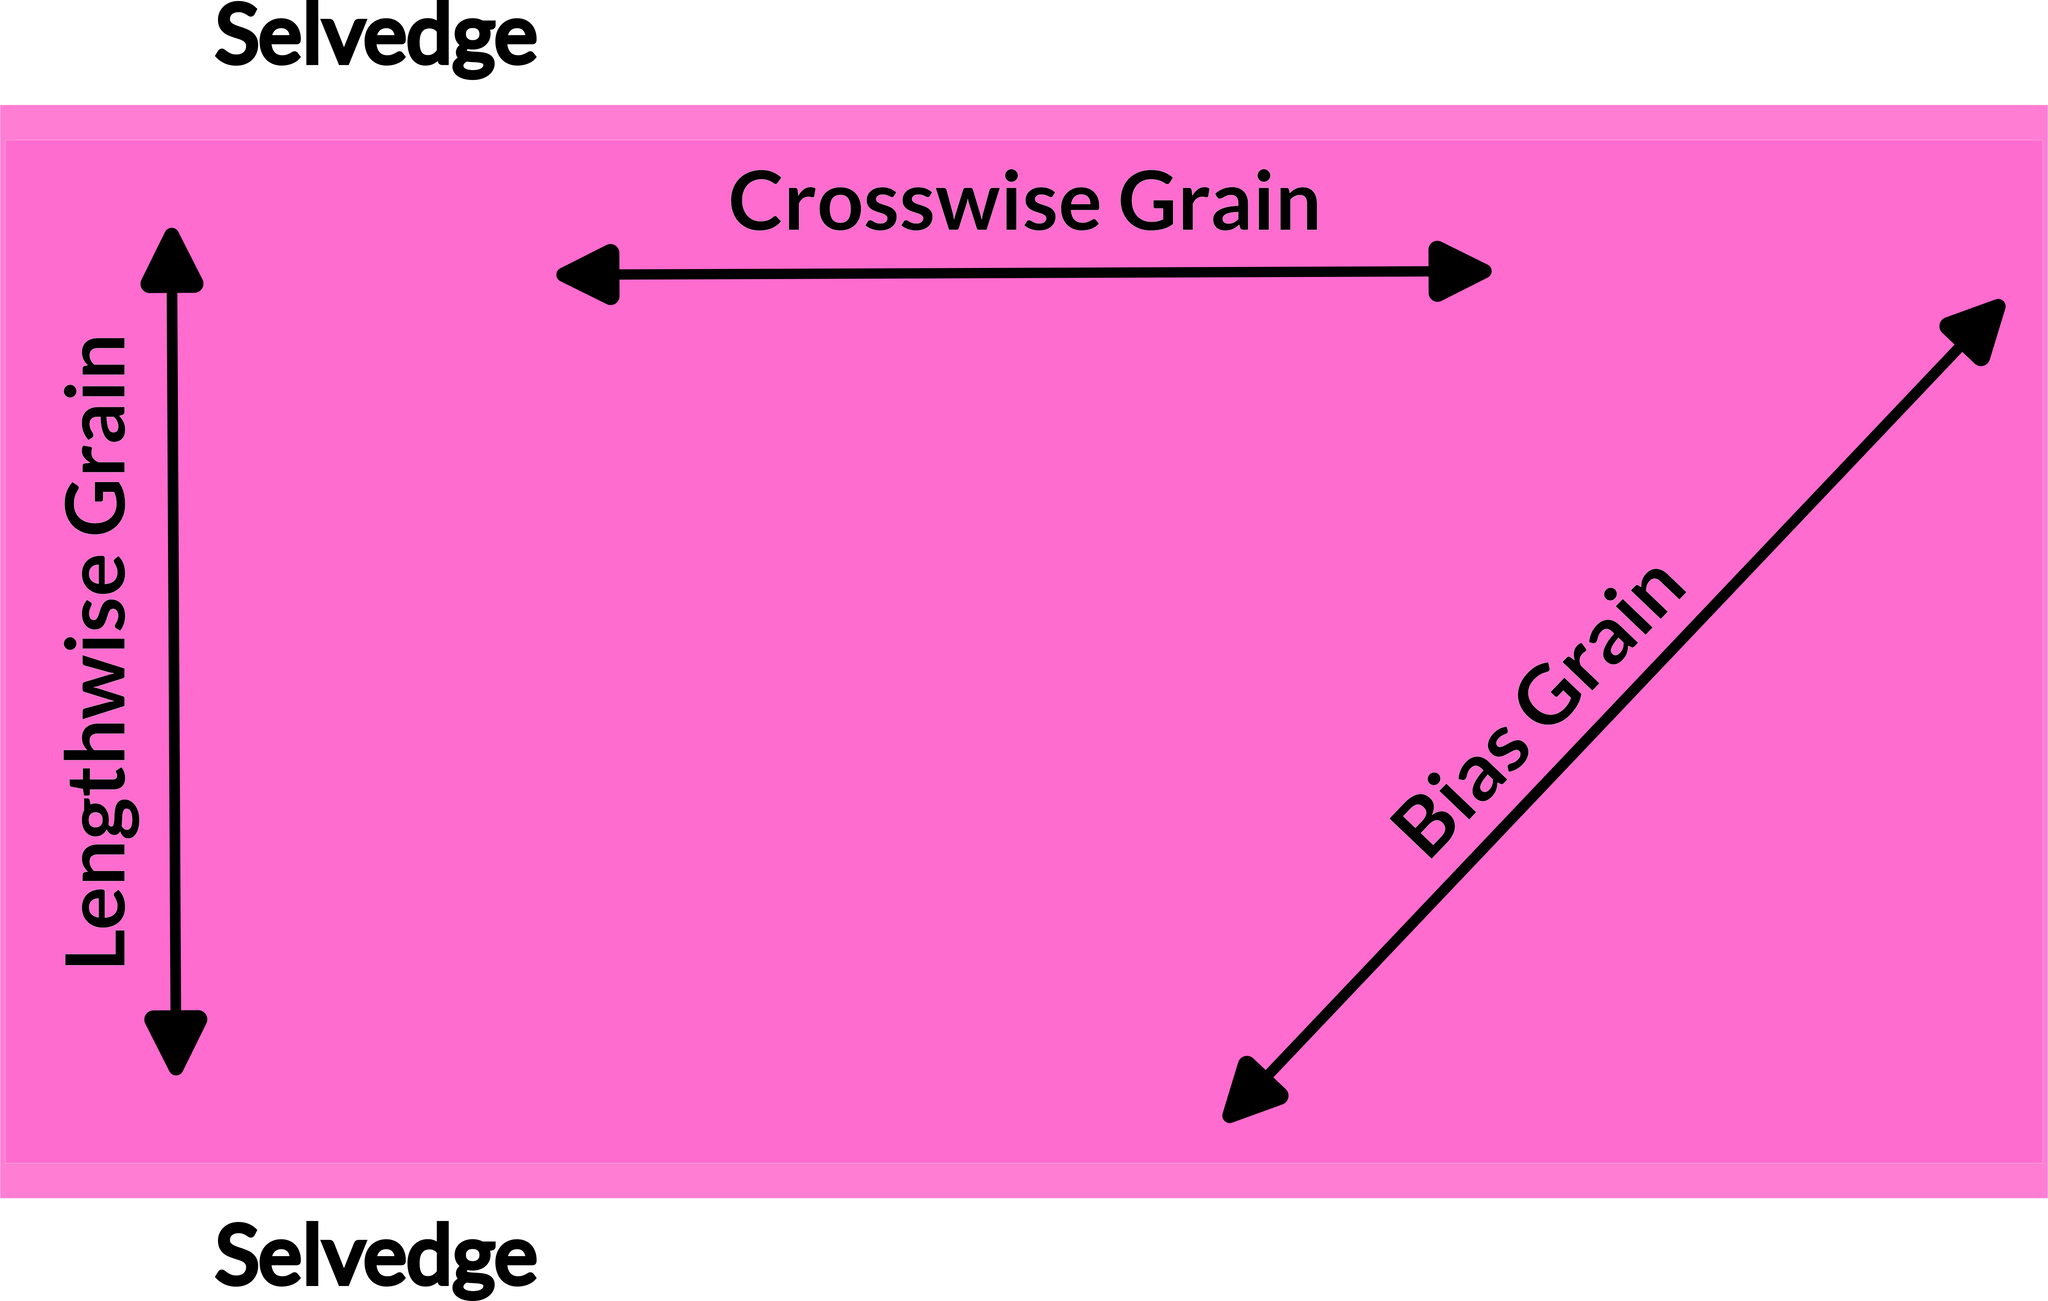 figure showing fabric grain